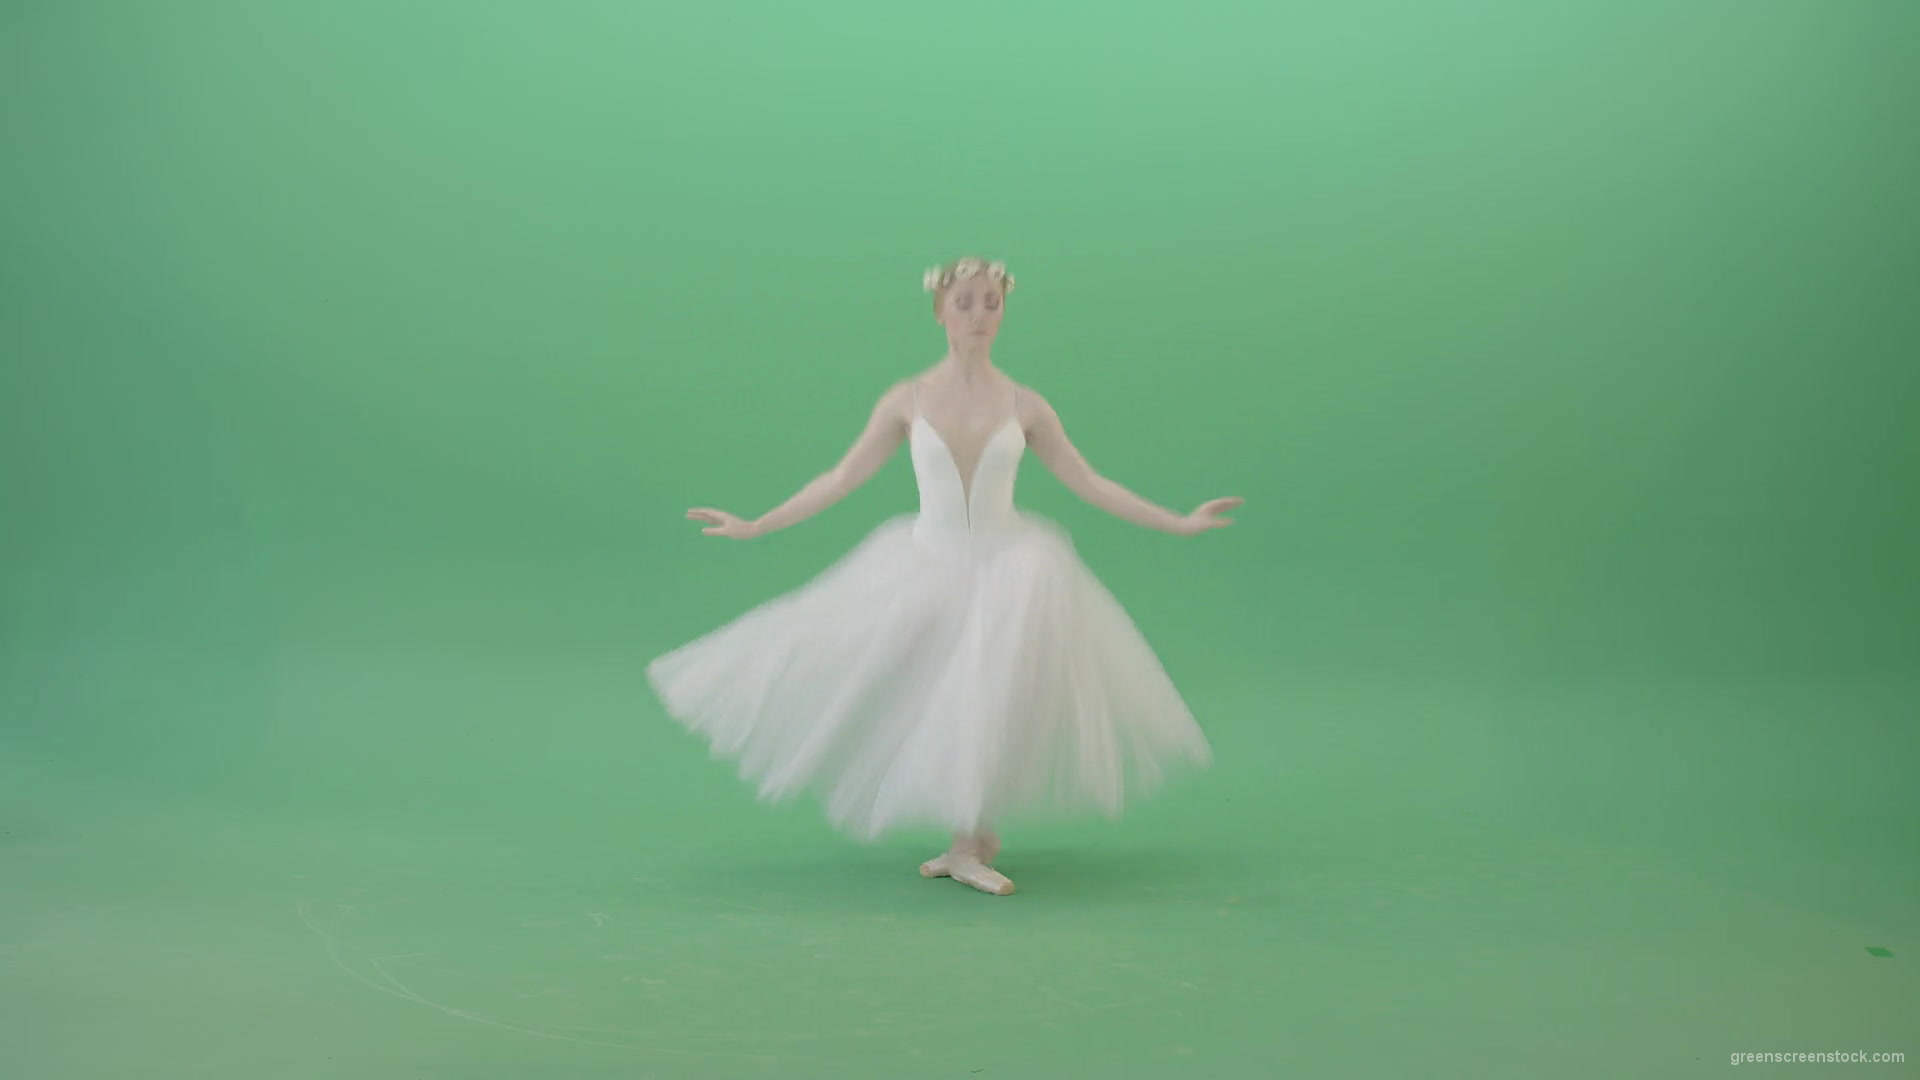 Beautiful-jumping-ballet-dancing-girl-choreograph-jumps-on-green-screen-4K-Video-Footage-1920_005 Green Screen Stock